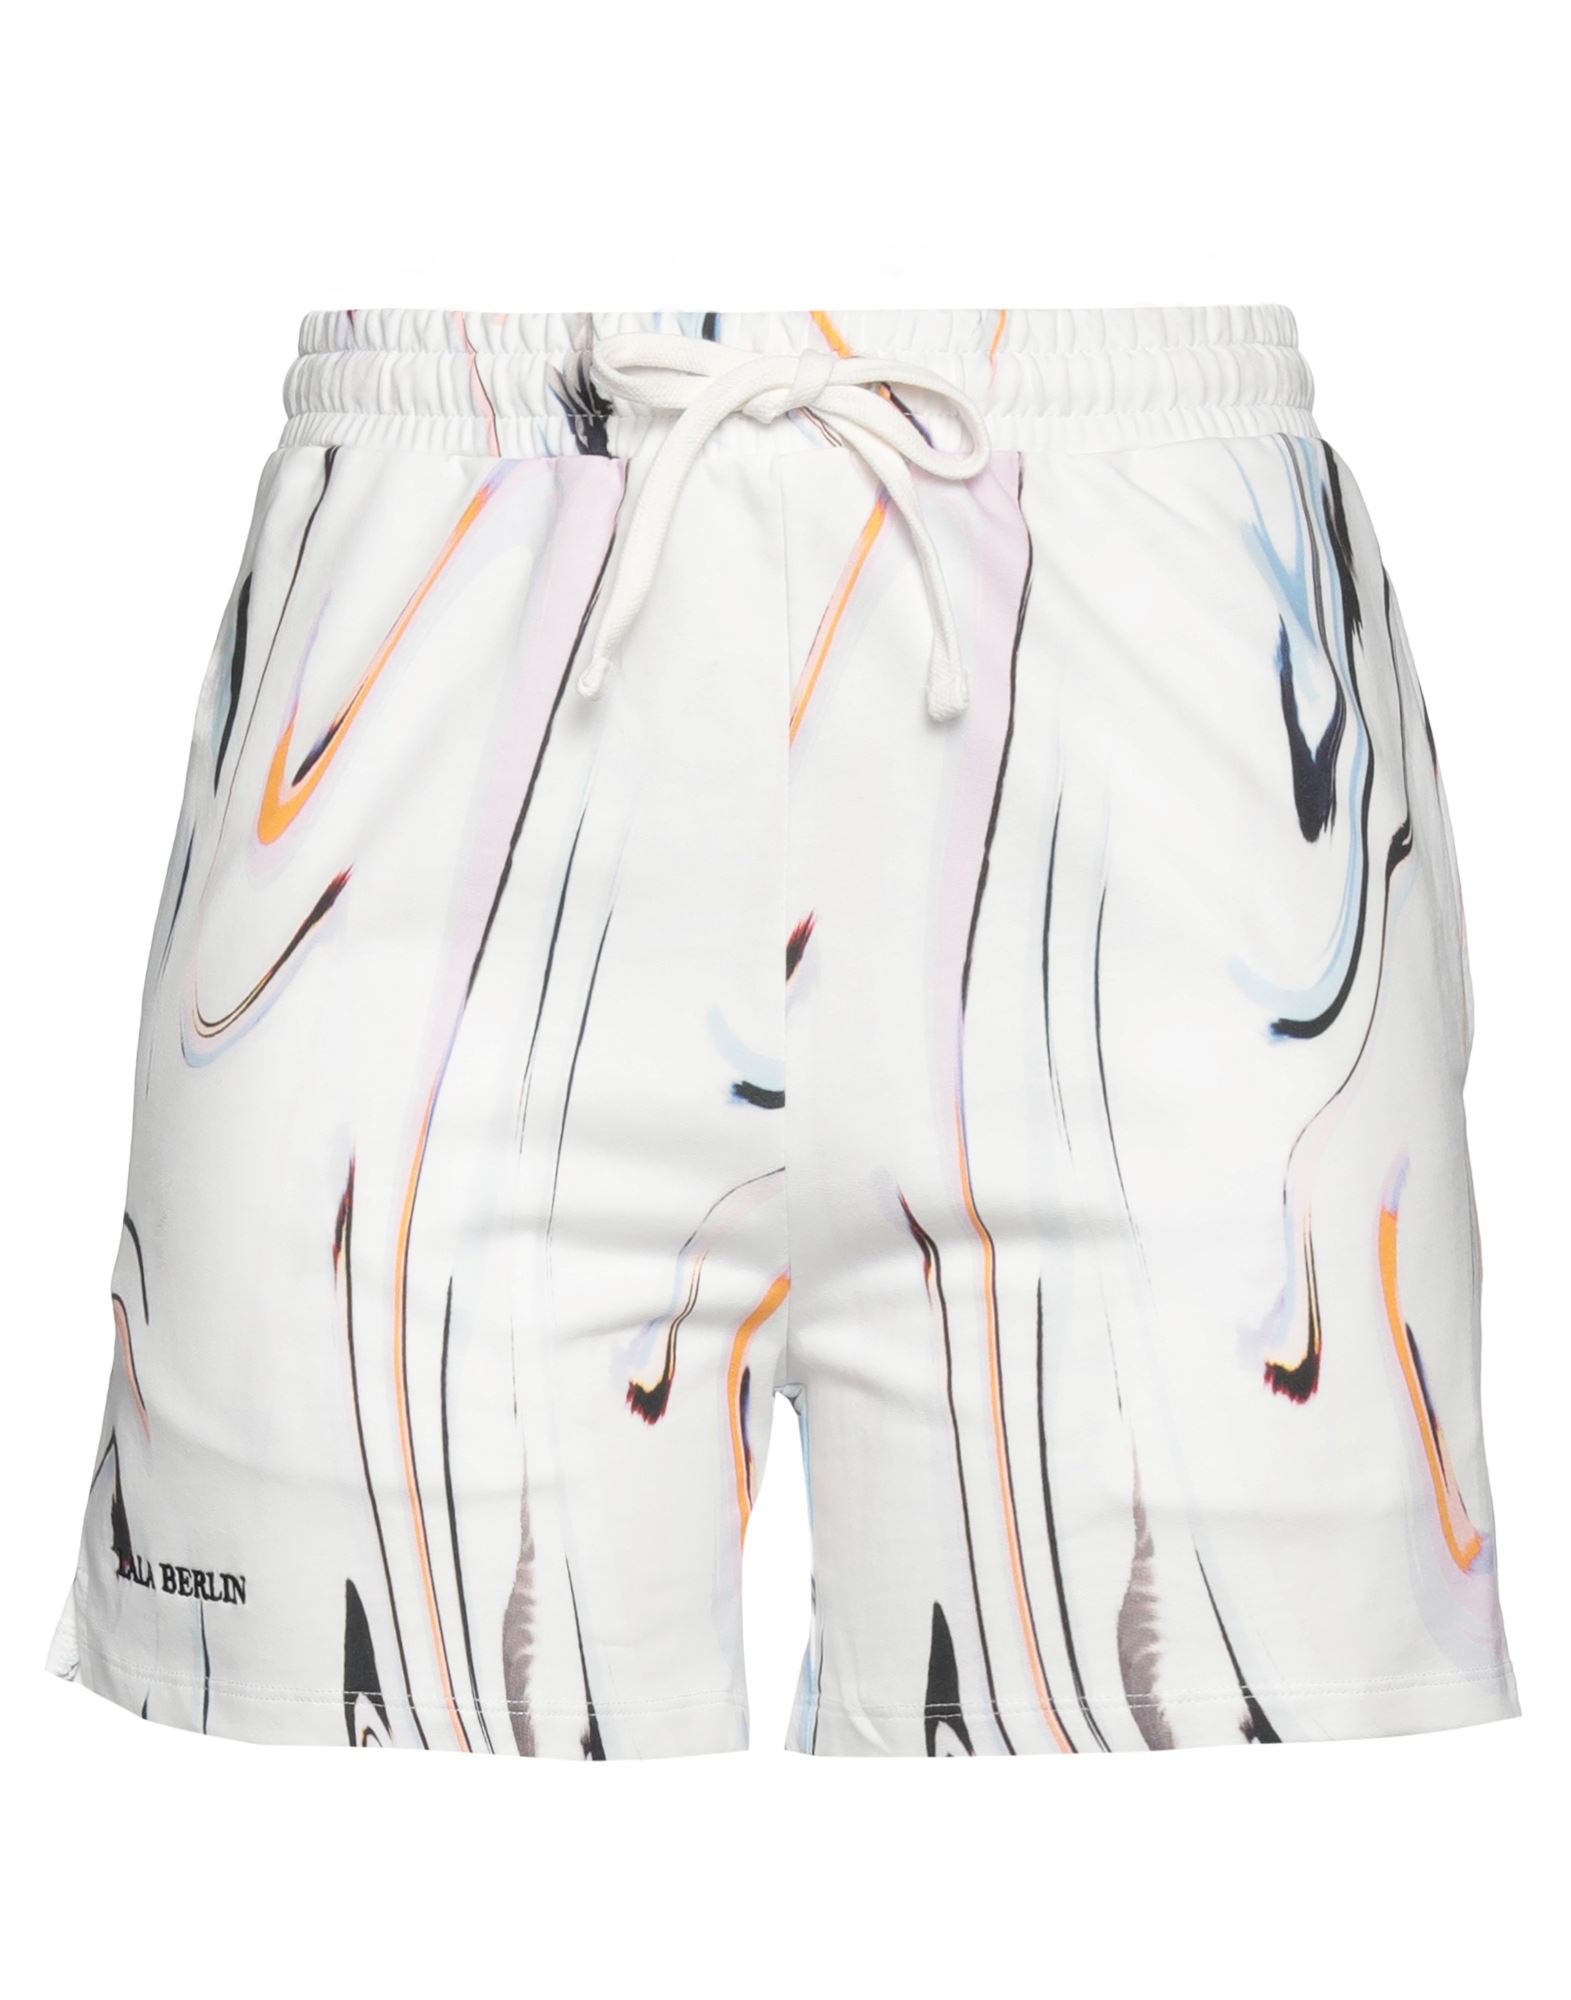 LALA BERLIN Shorts & Bermudashorts Damen Weiß von LALA BERLIN